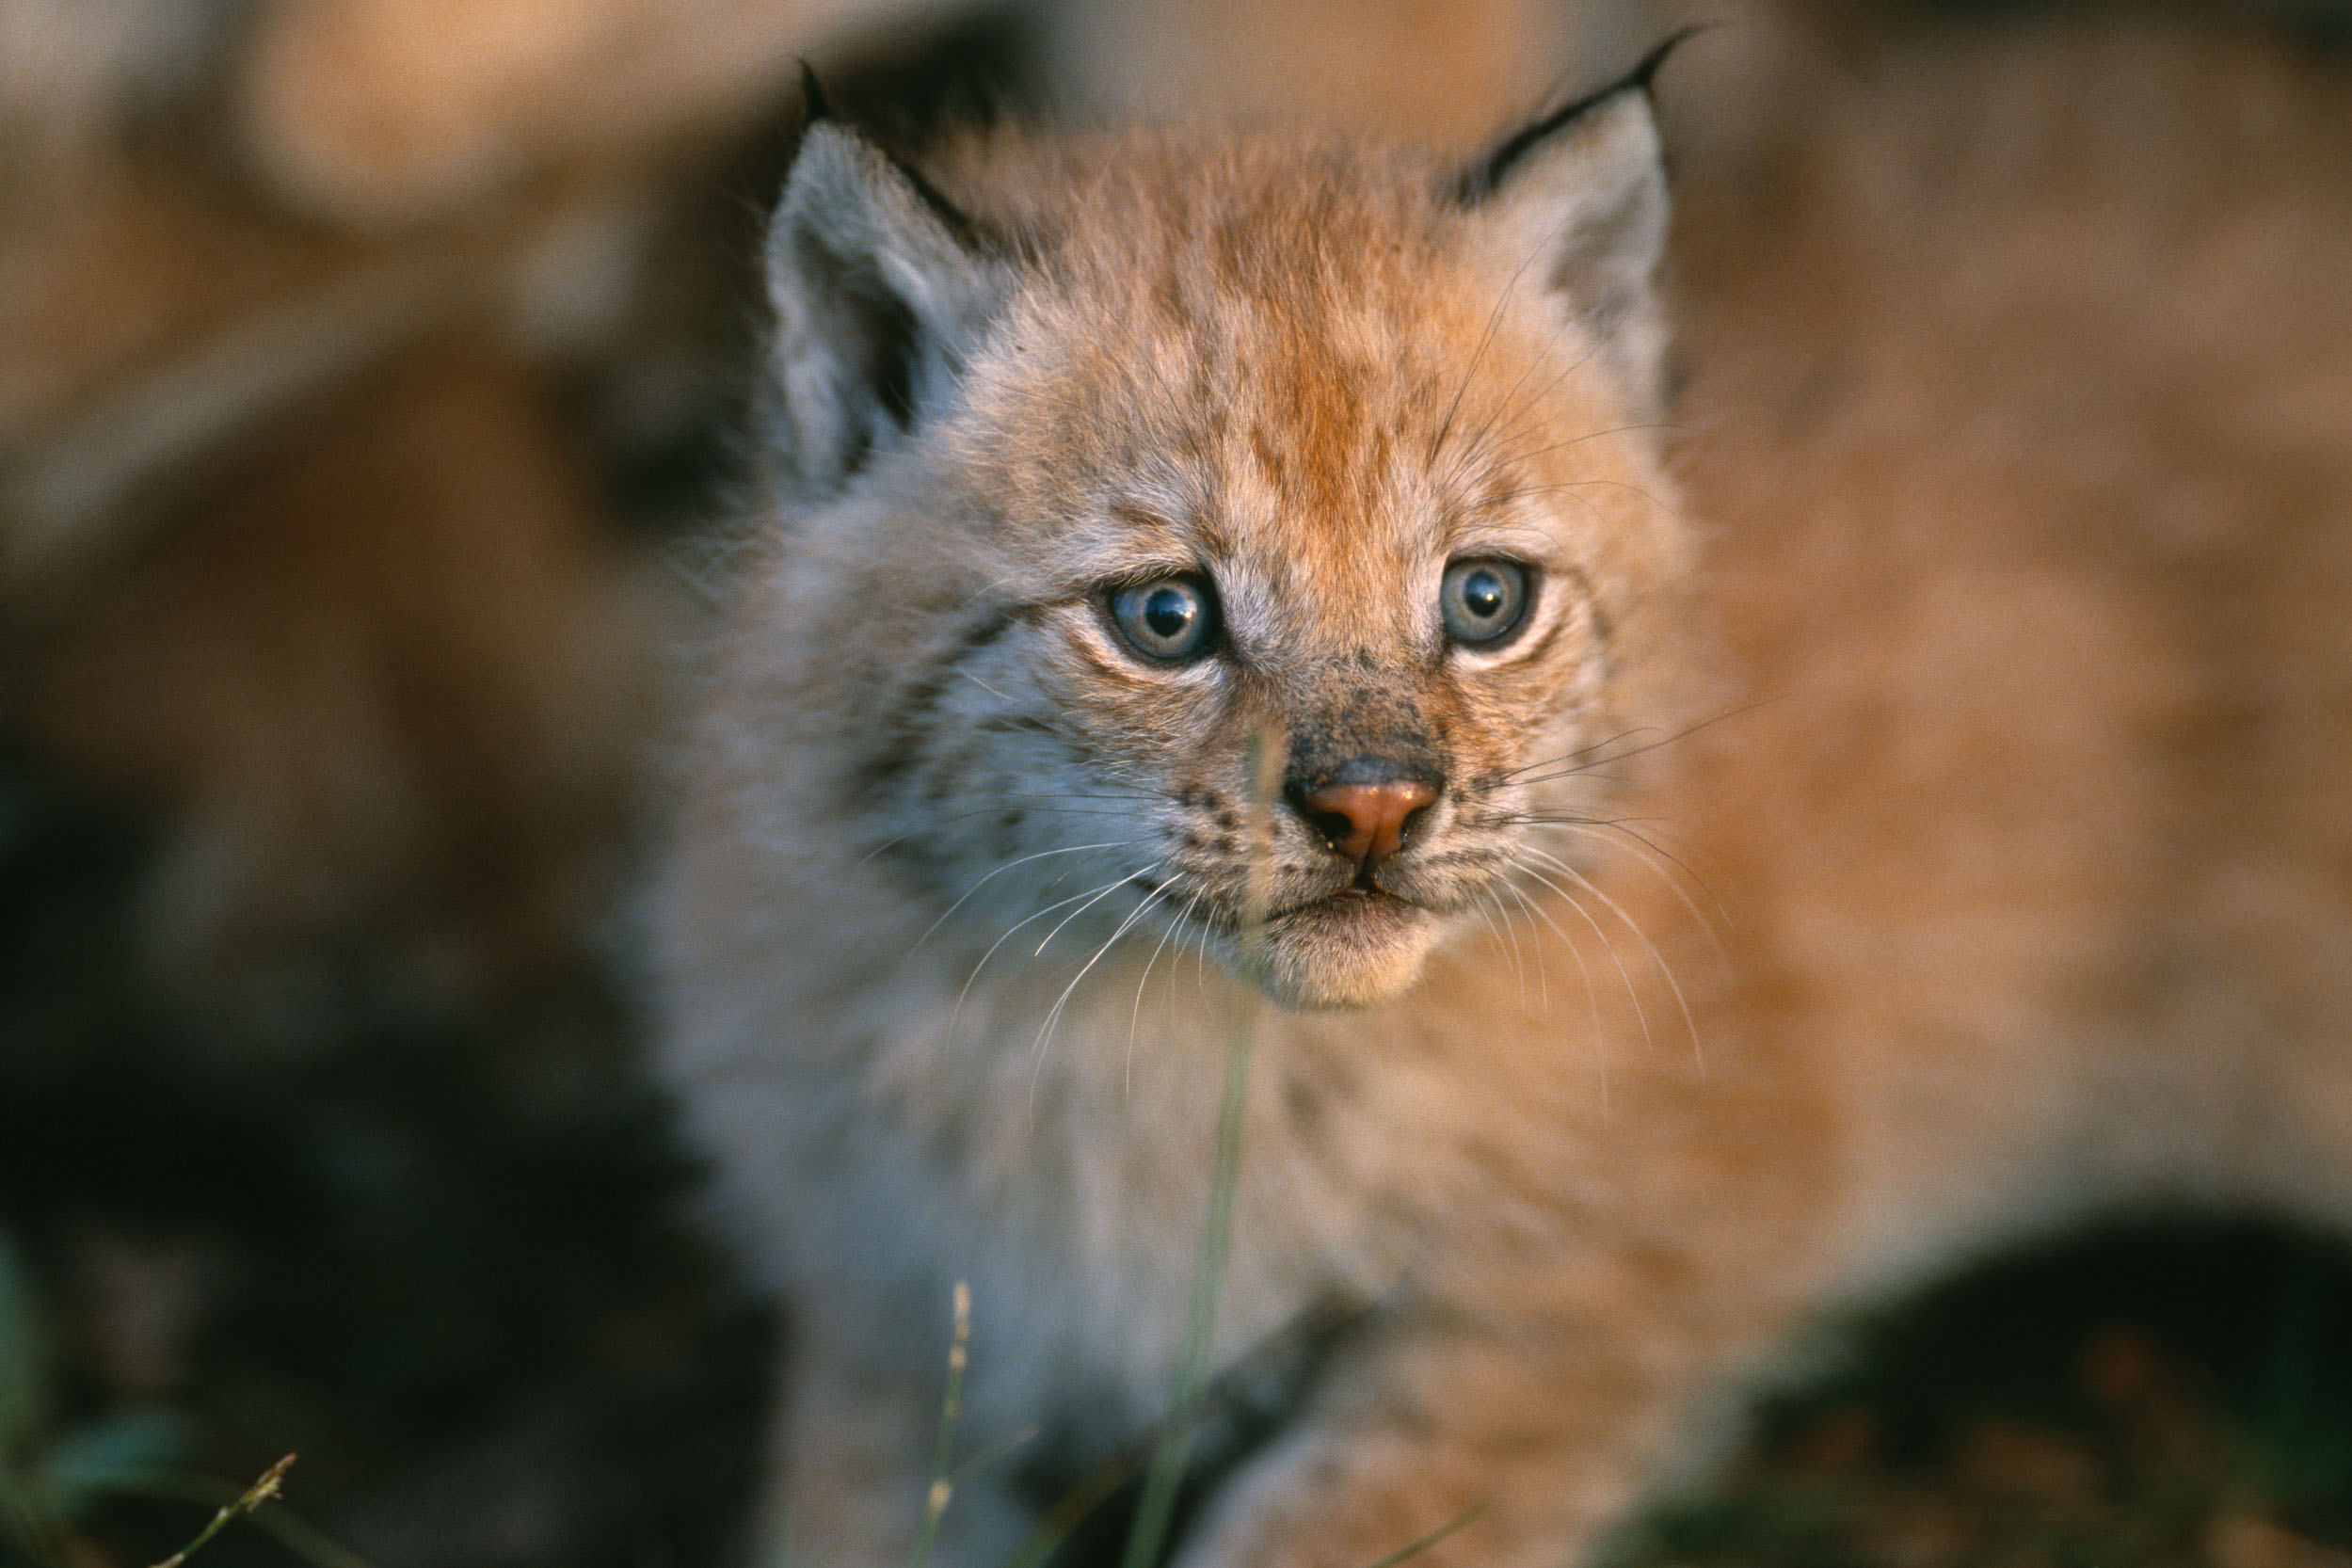 Lynx hunting quotas are set per region